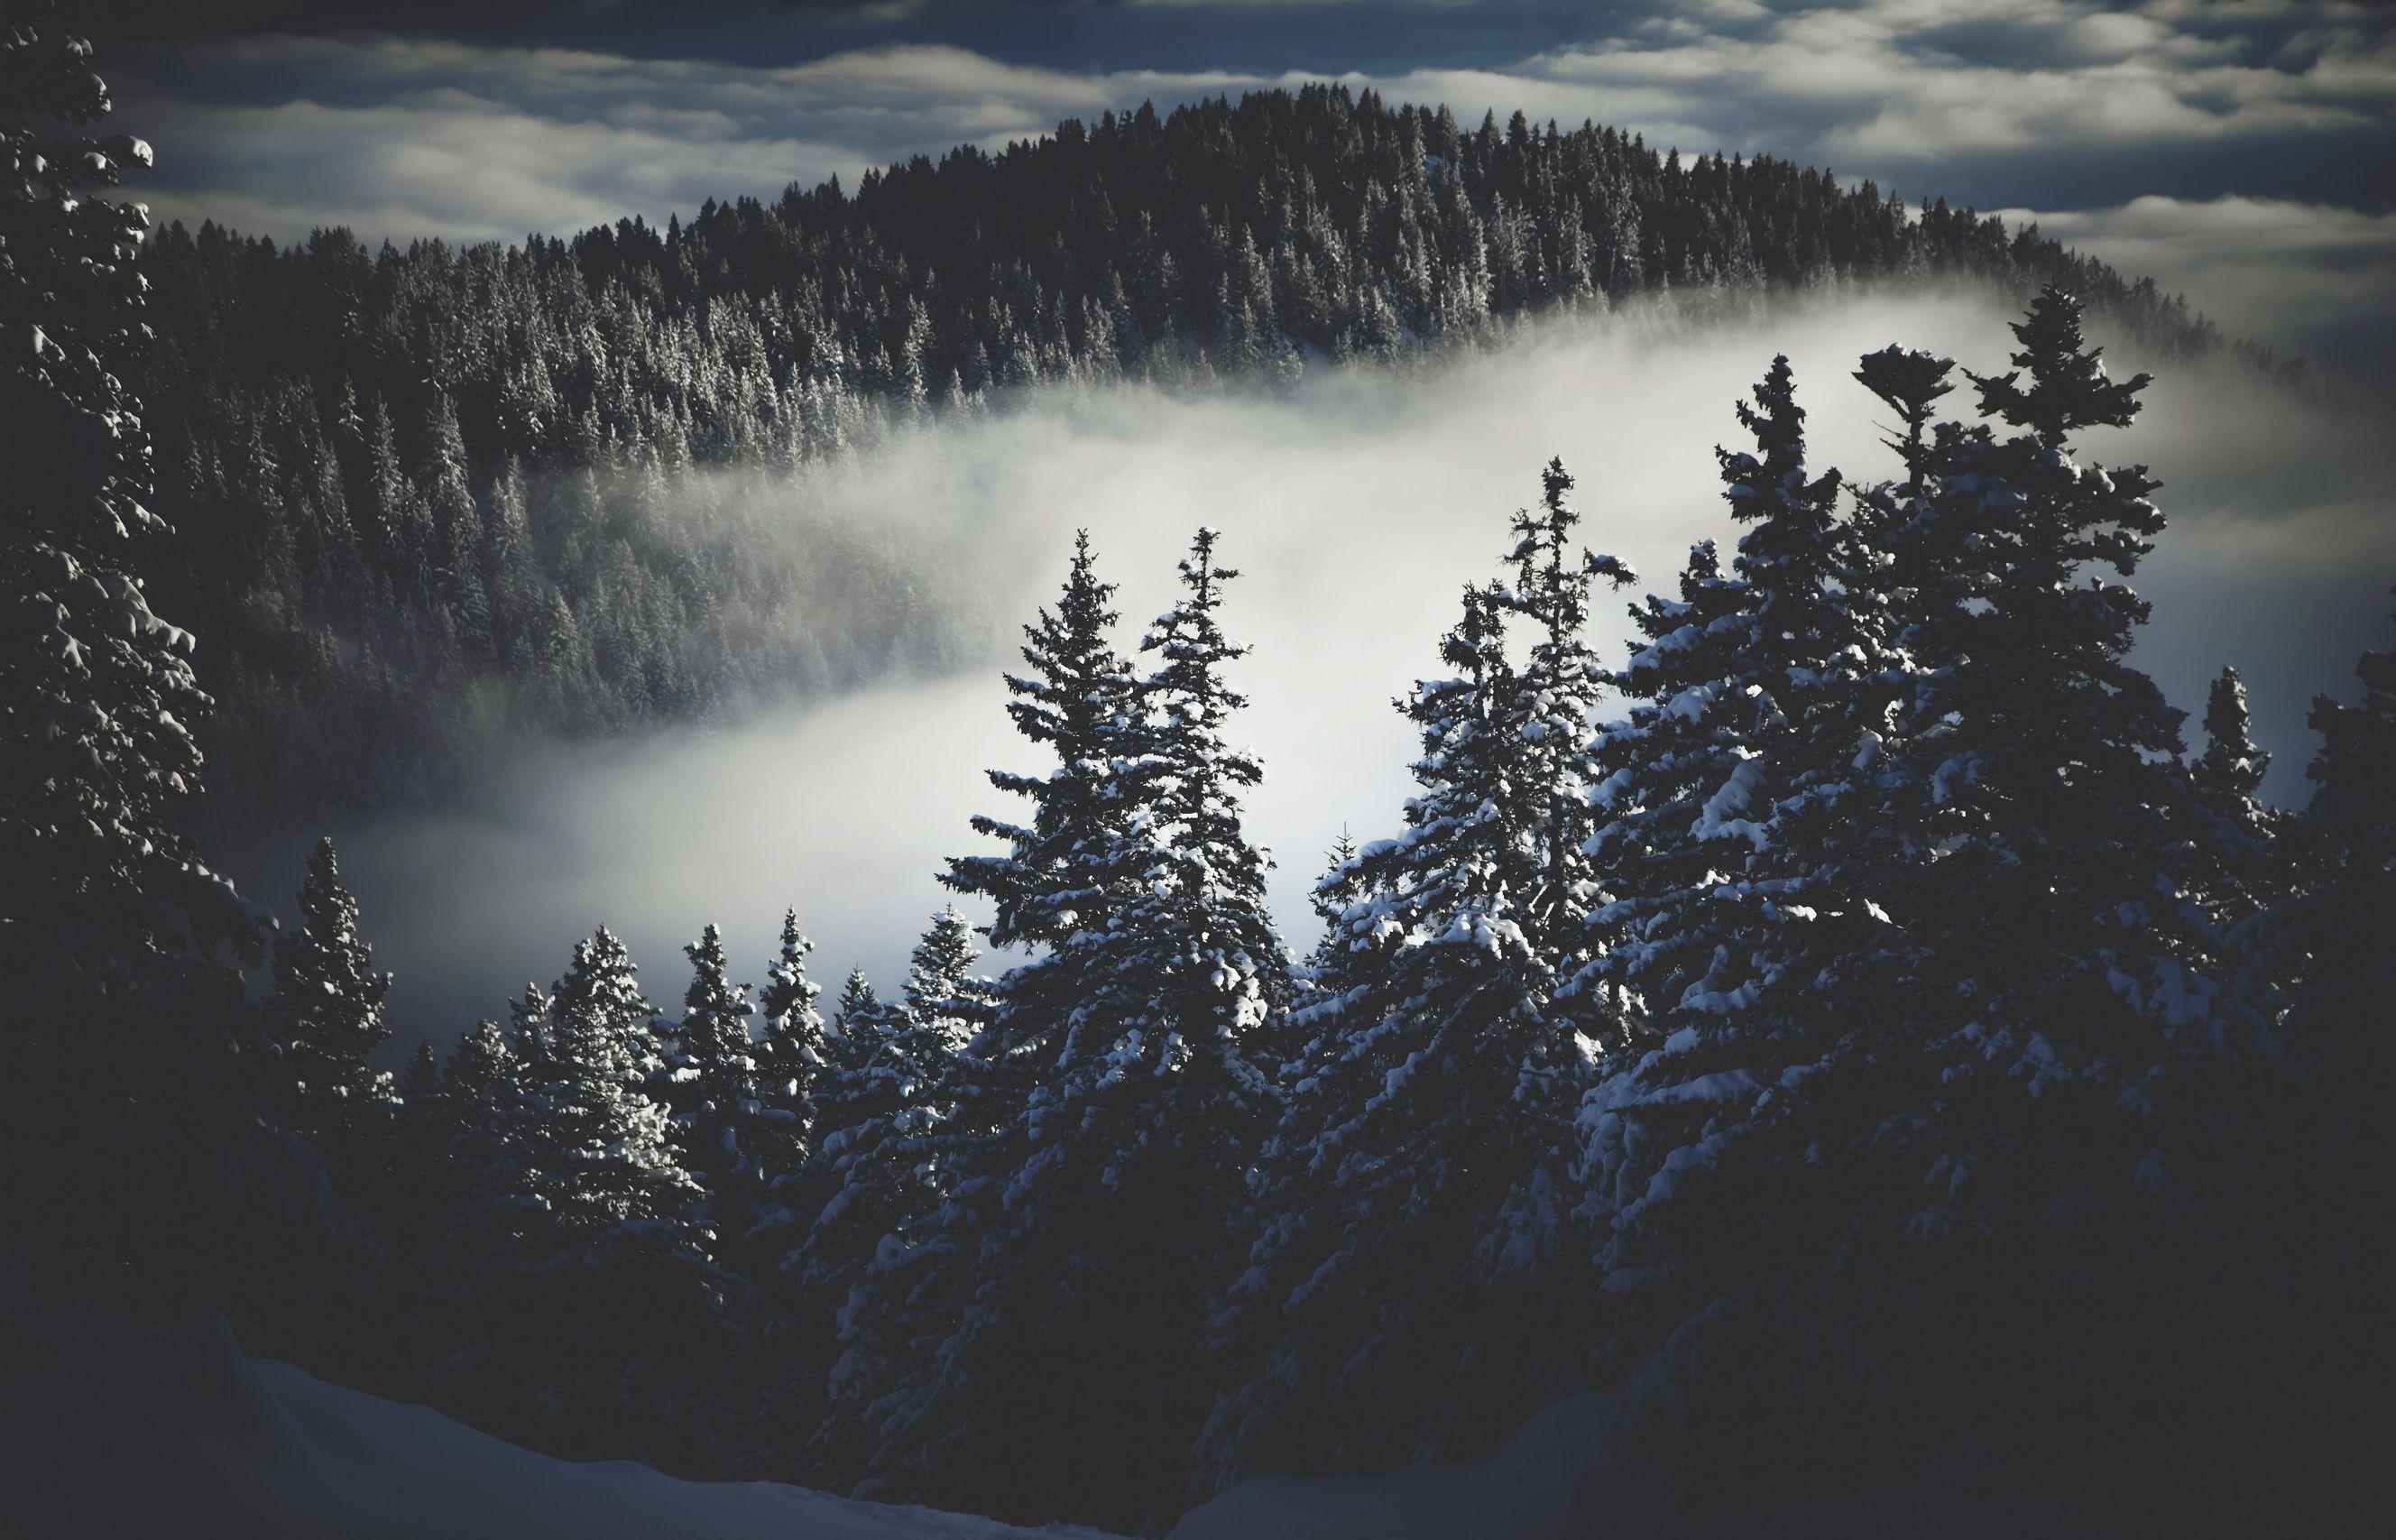 Dark Winter Pictures | Download Free Images on Unsplash